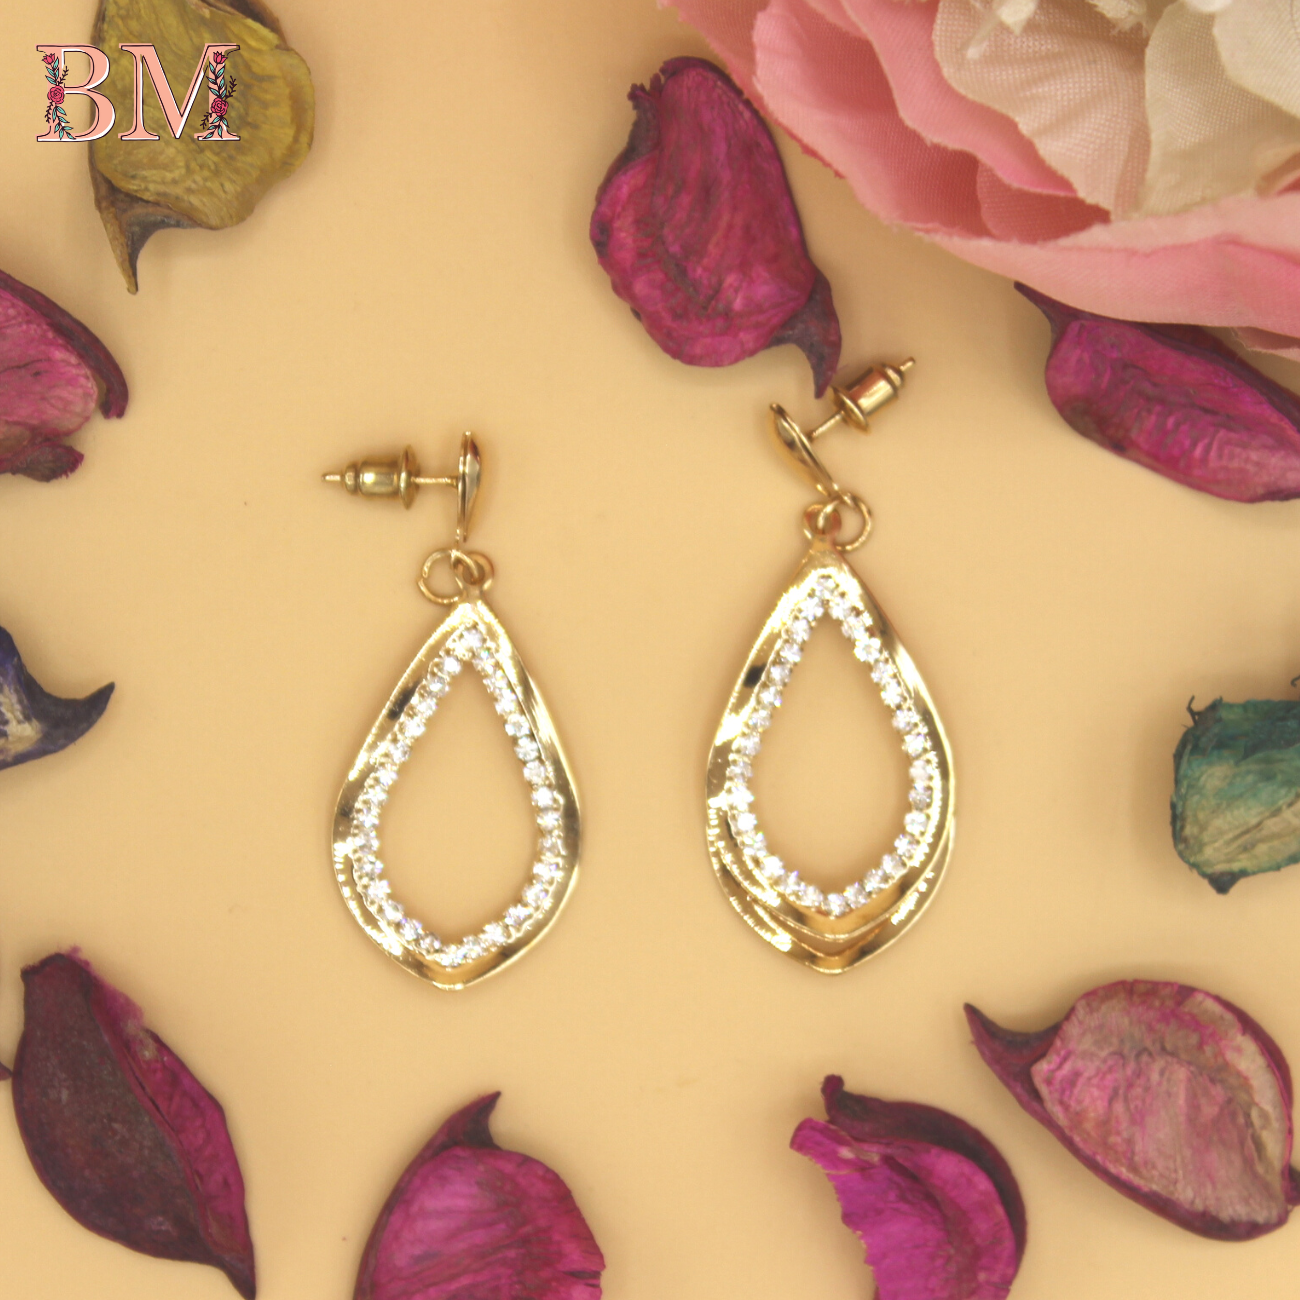 Affordable Elegance: Bangles, Bracelets, and Jewellery Under Rs. 599**